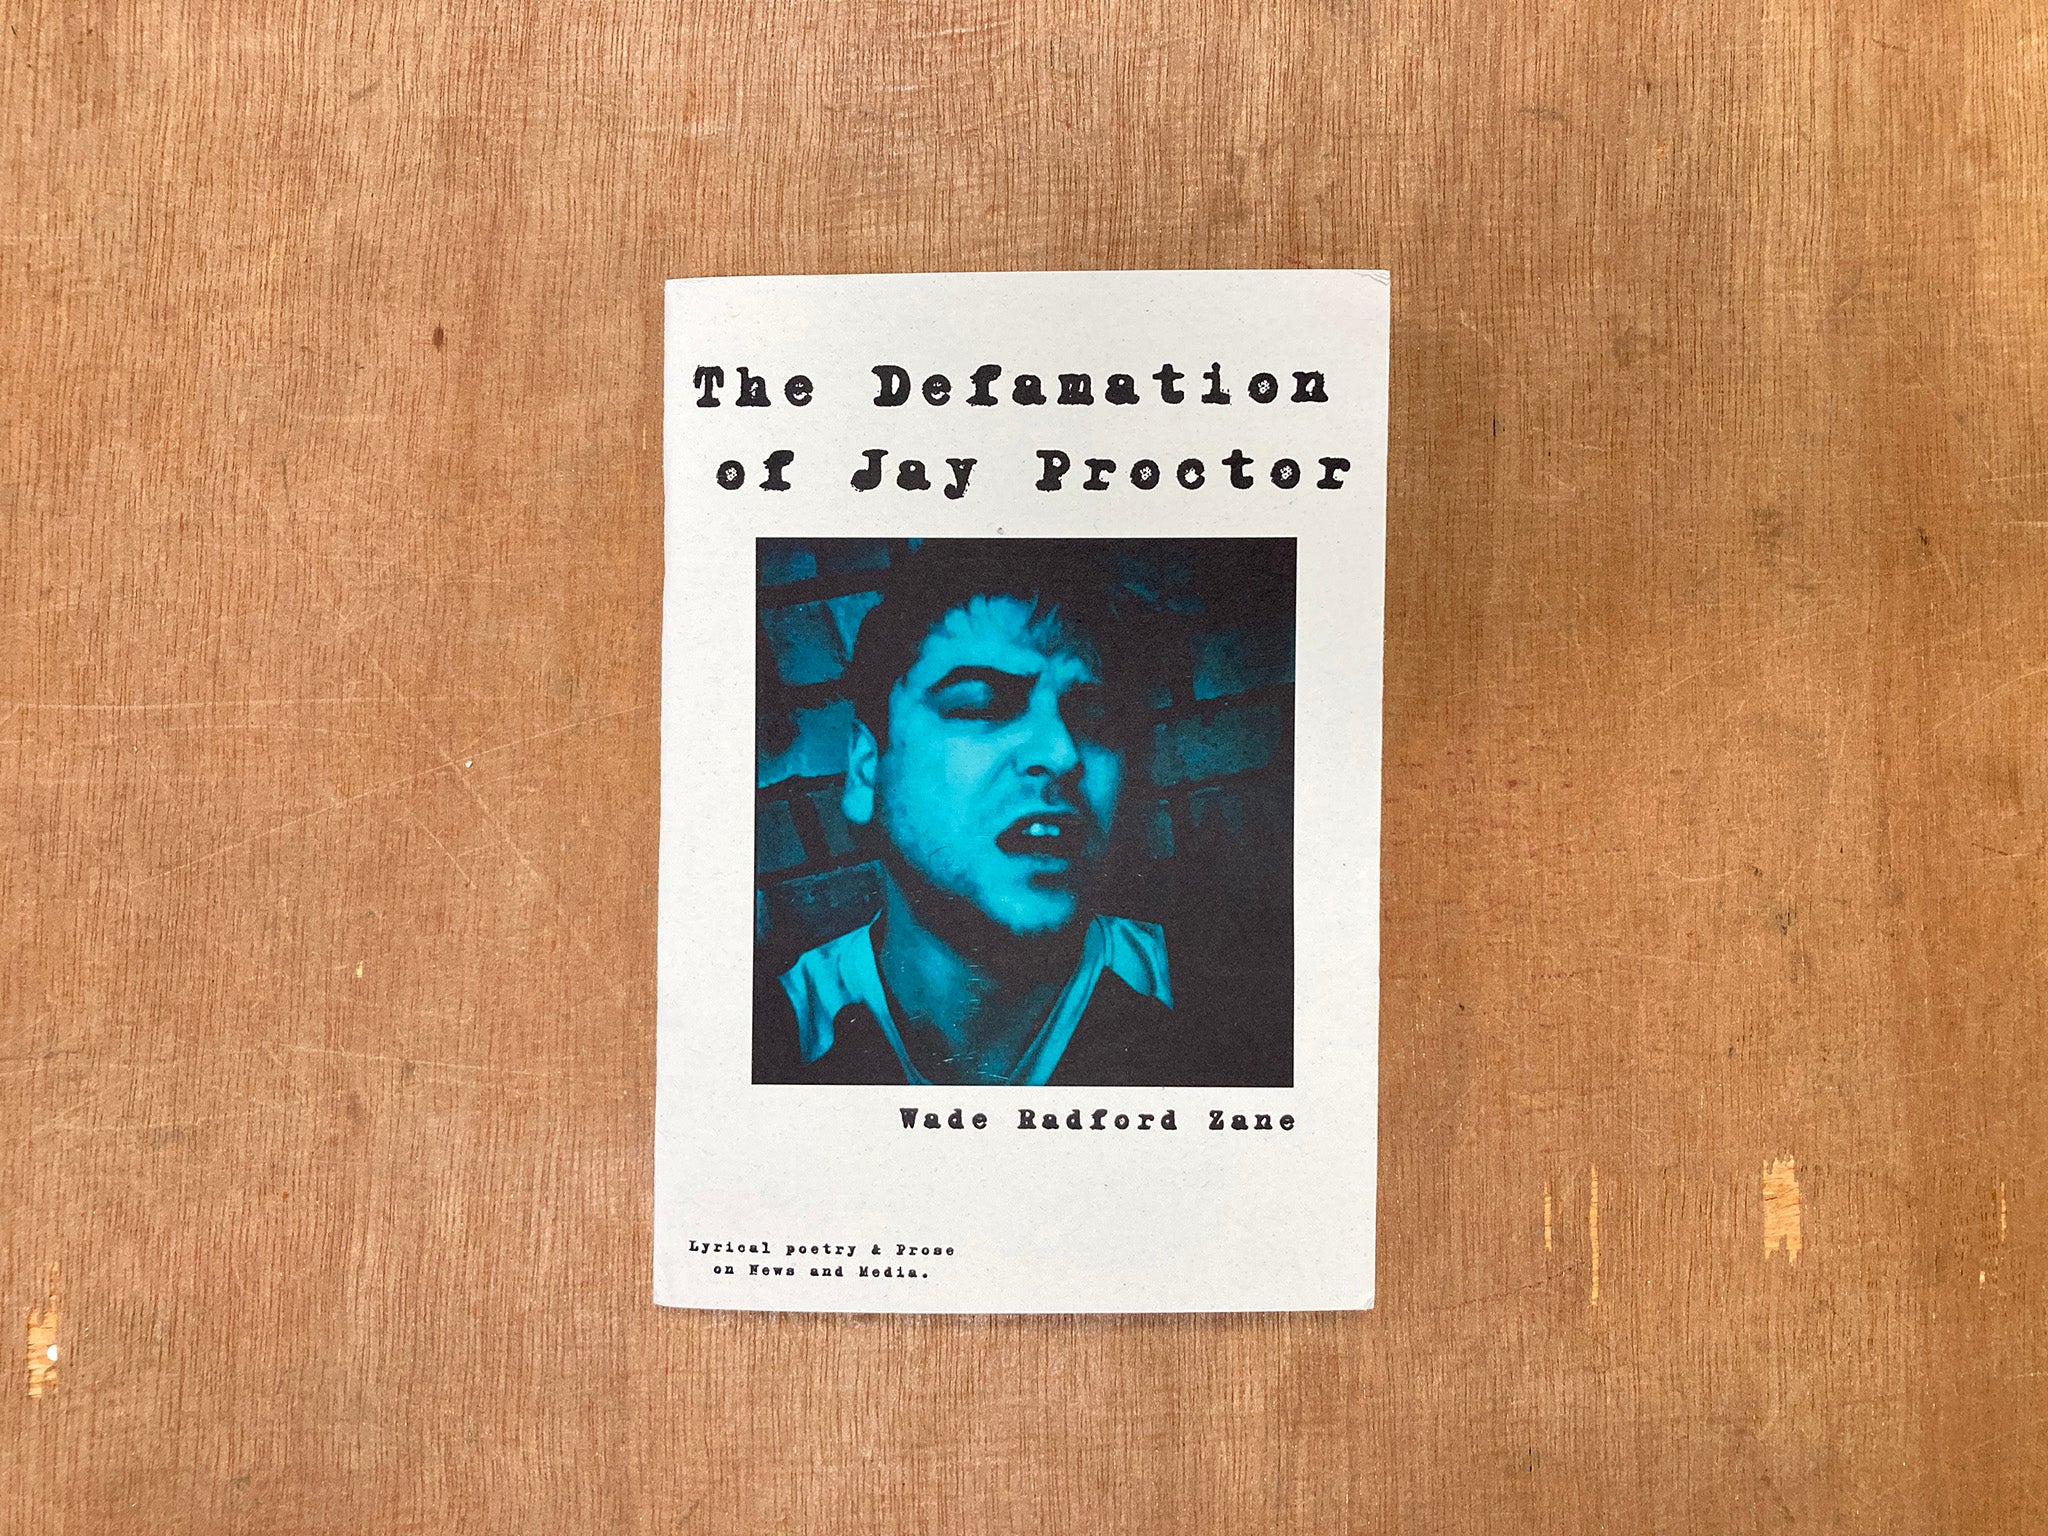 THE DEFAMATION OF JAY PROCTOR  by Wade Radford Zane